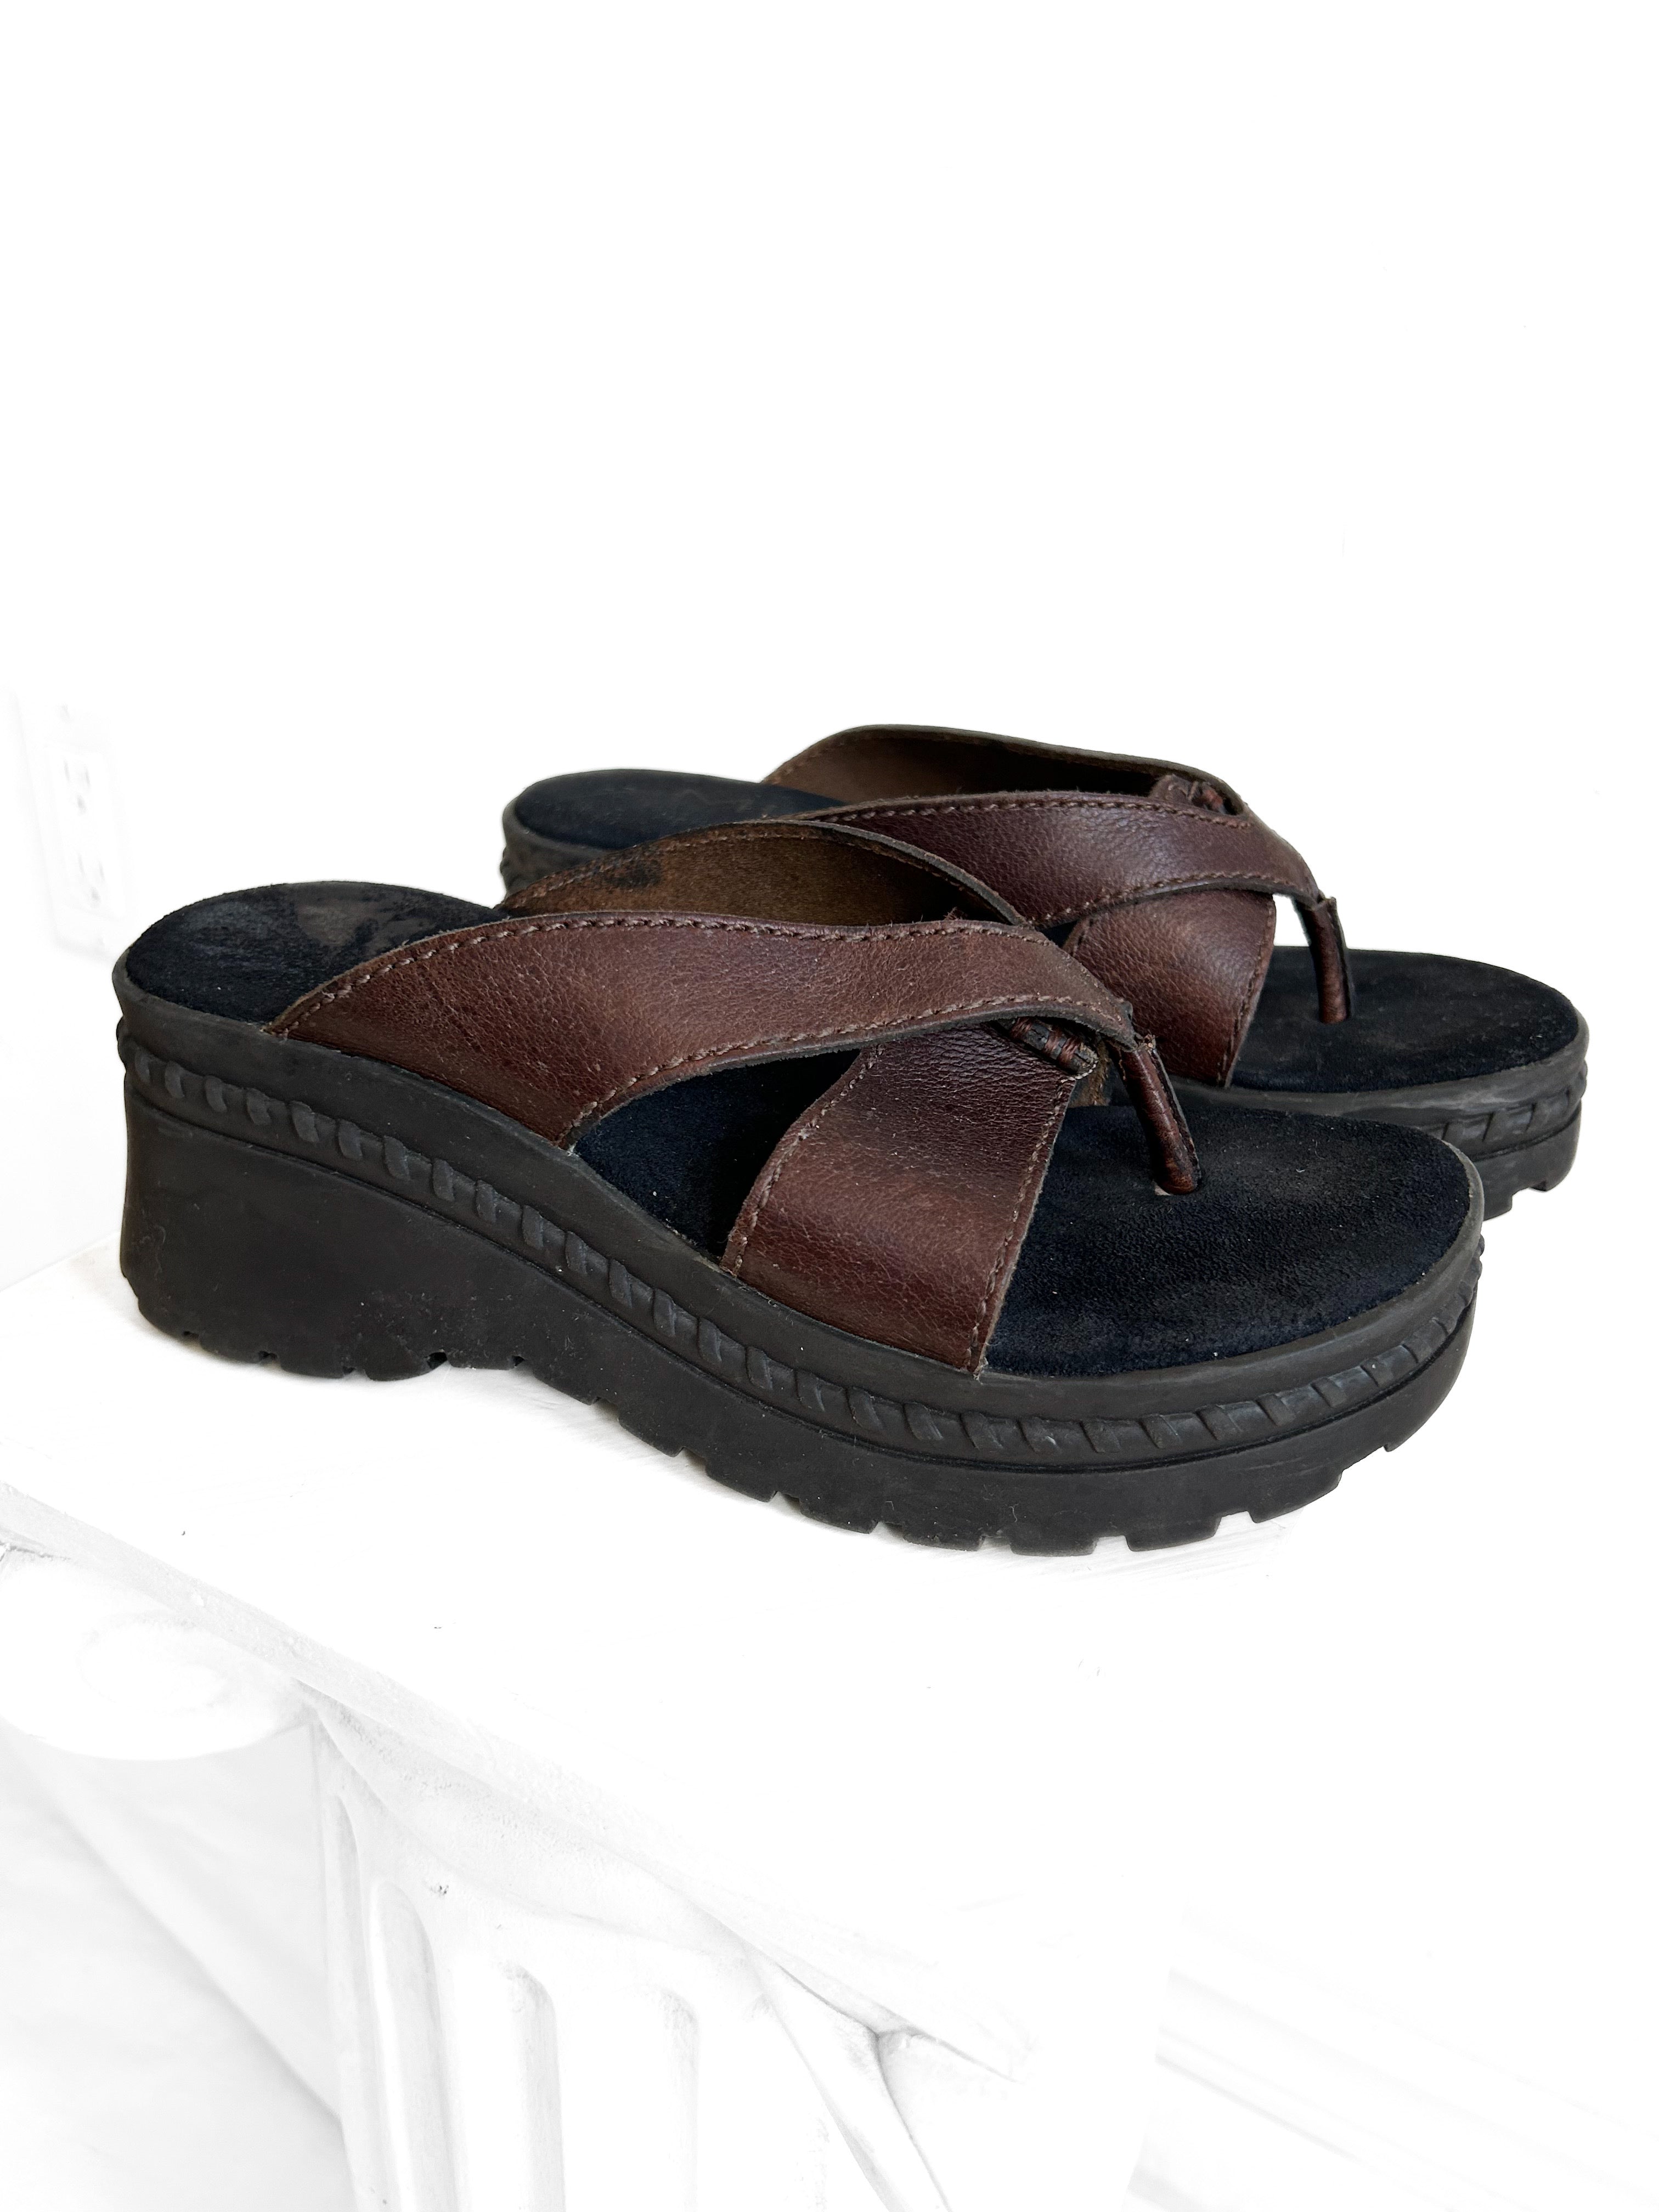 Y2K Brown Leather Platform Sandals, Size 6, Made in Brazil